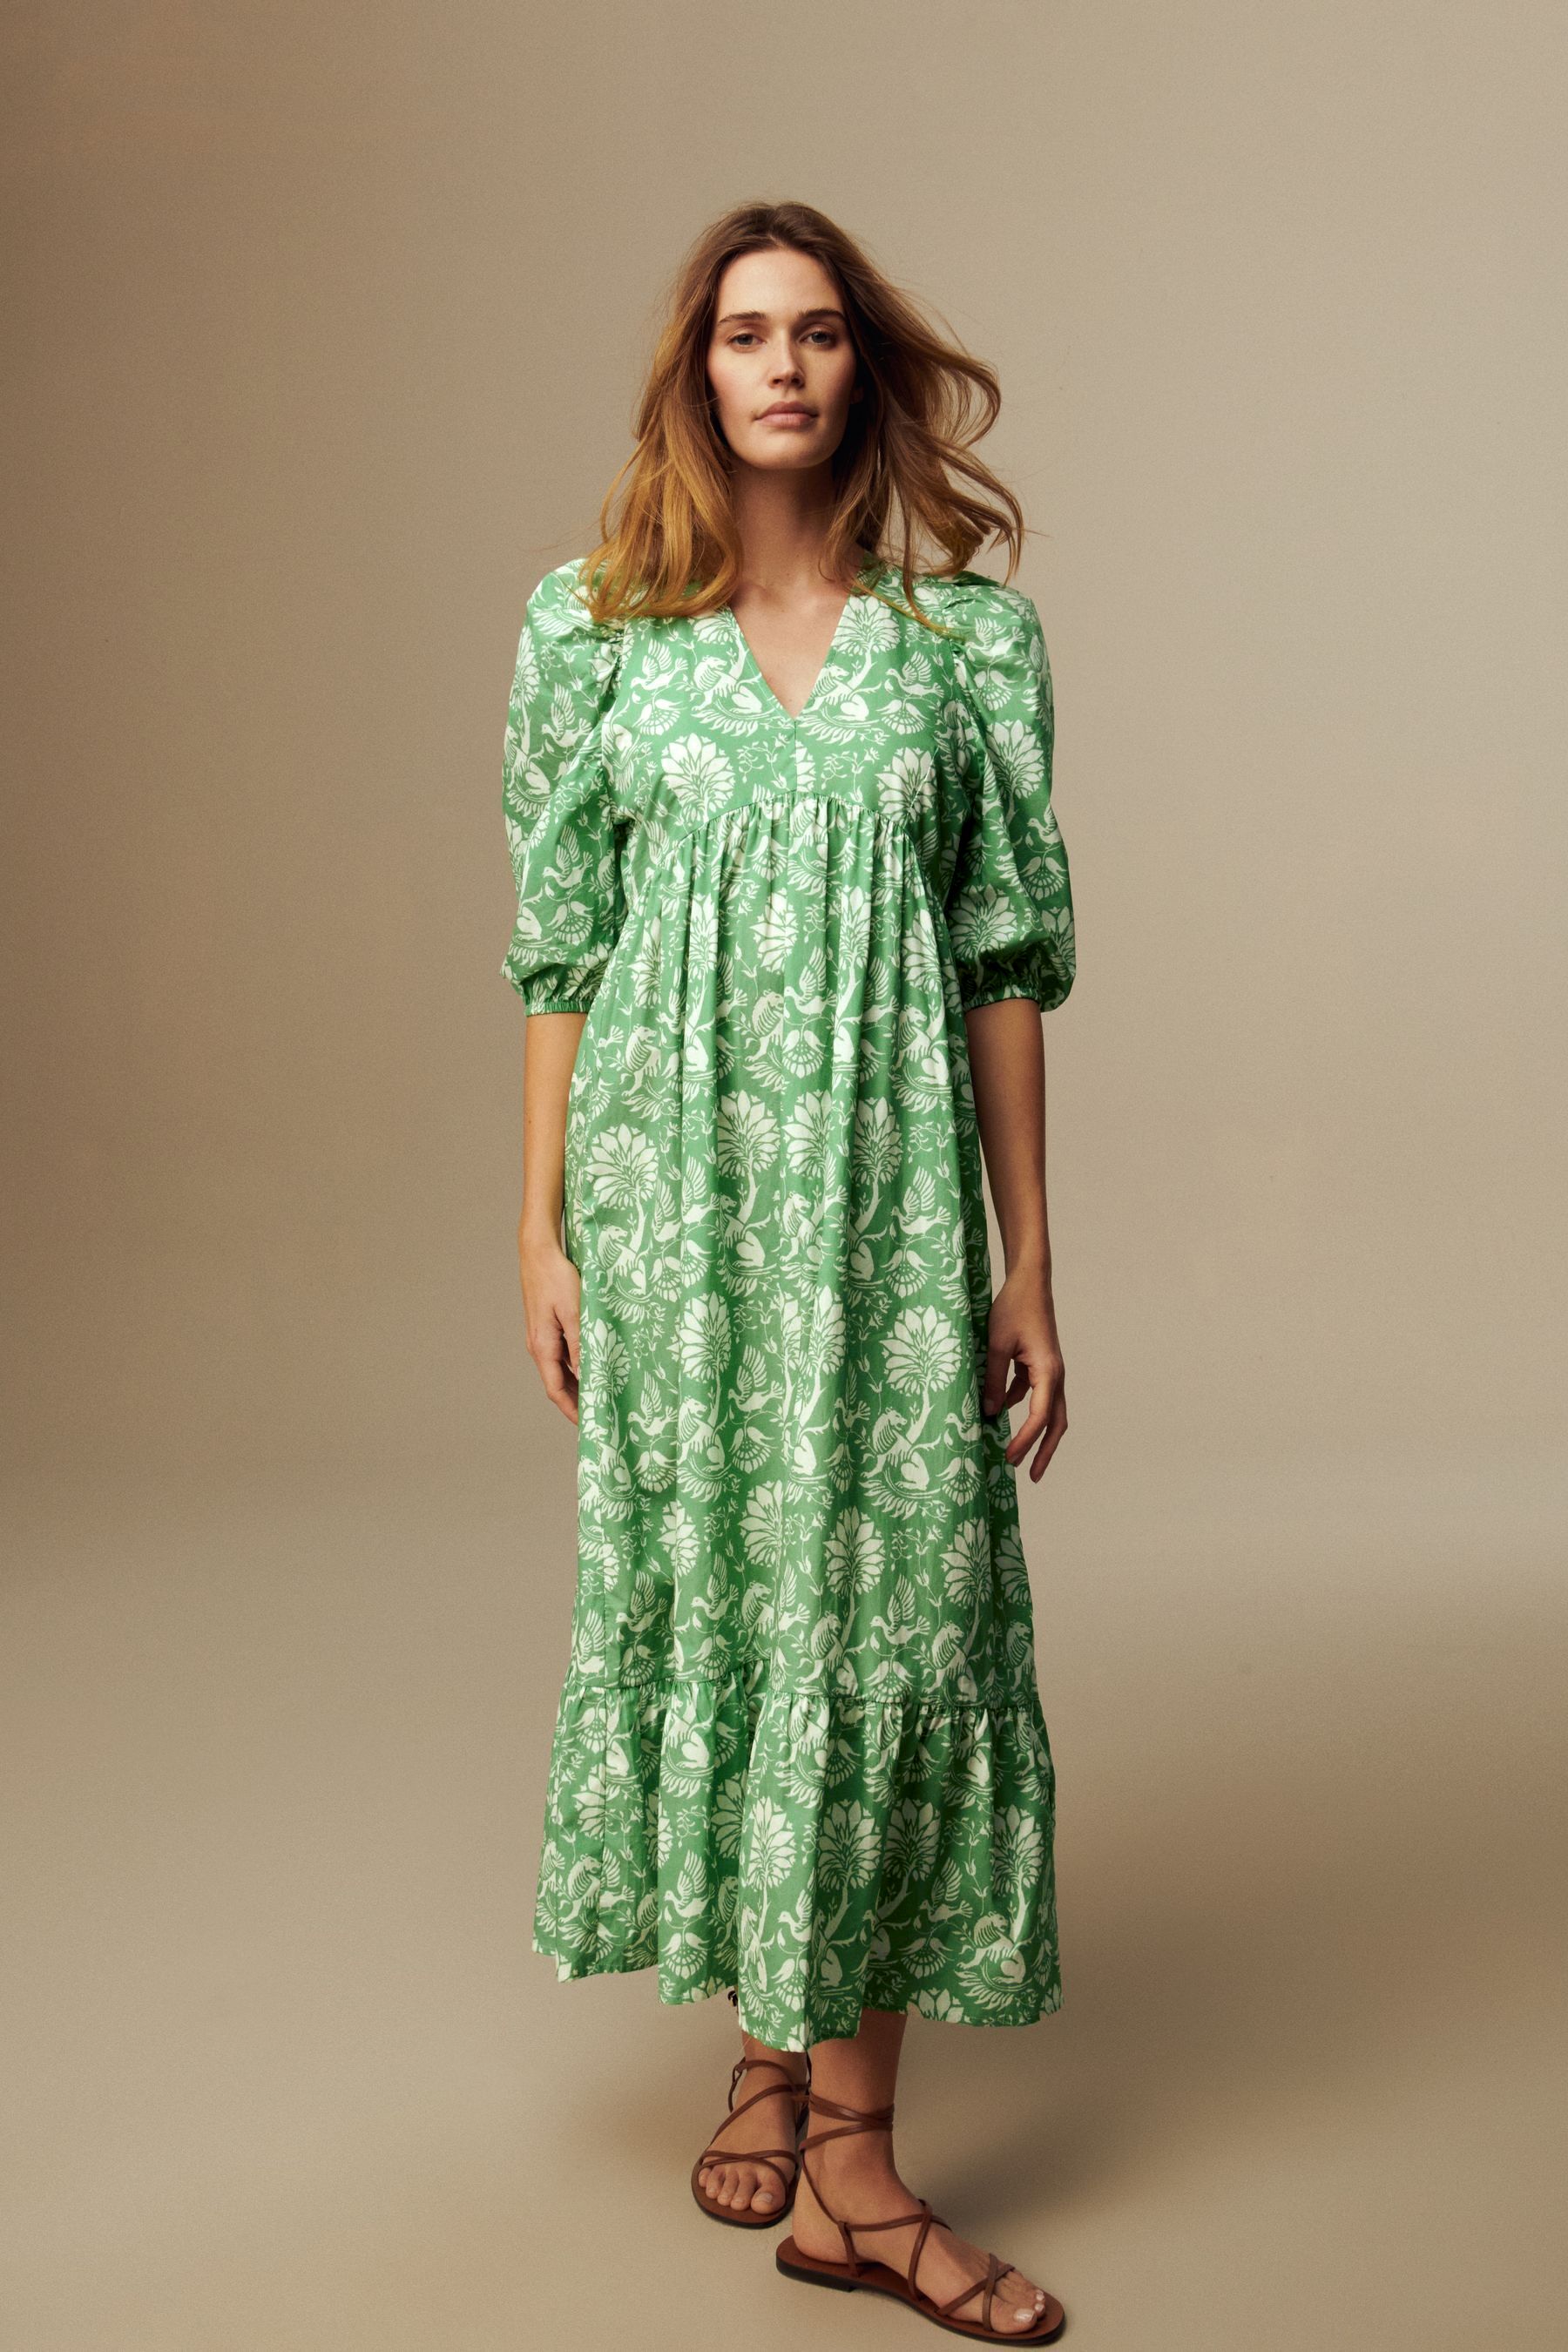 Laura Ashley Green Camelot Print Green Midaxi Dress - Image 1 of 6